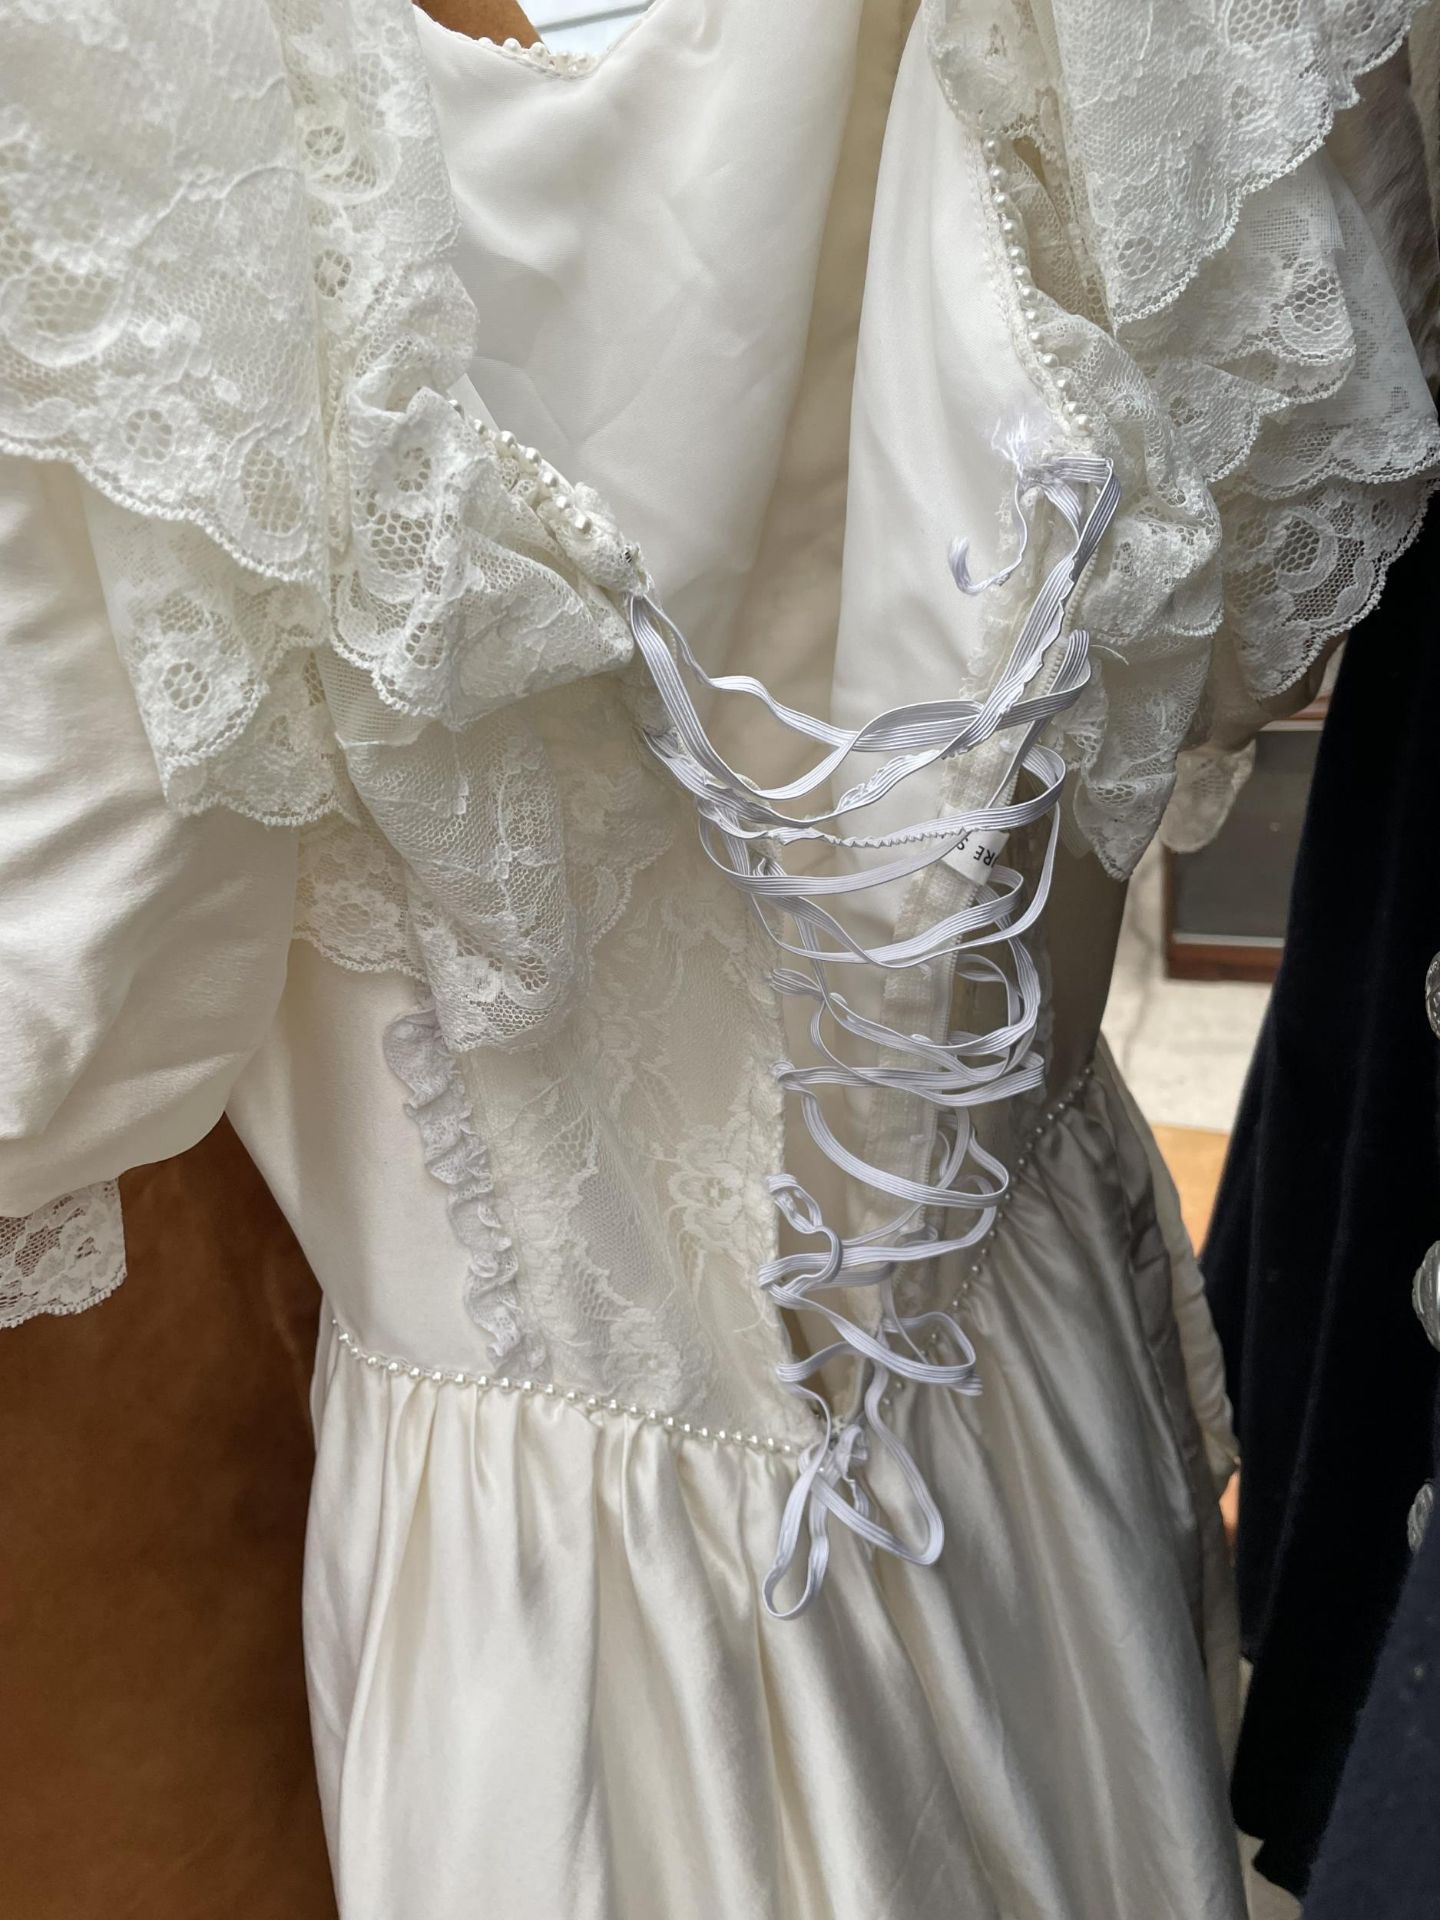 A VINTAGE WEDDING DRESS - Image 4 of 4